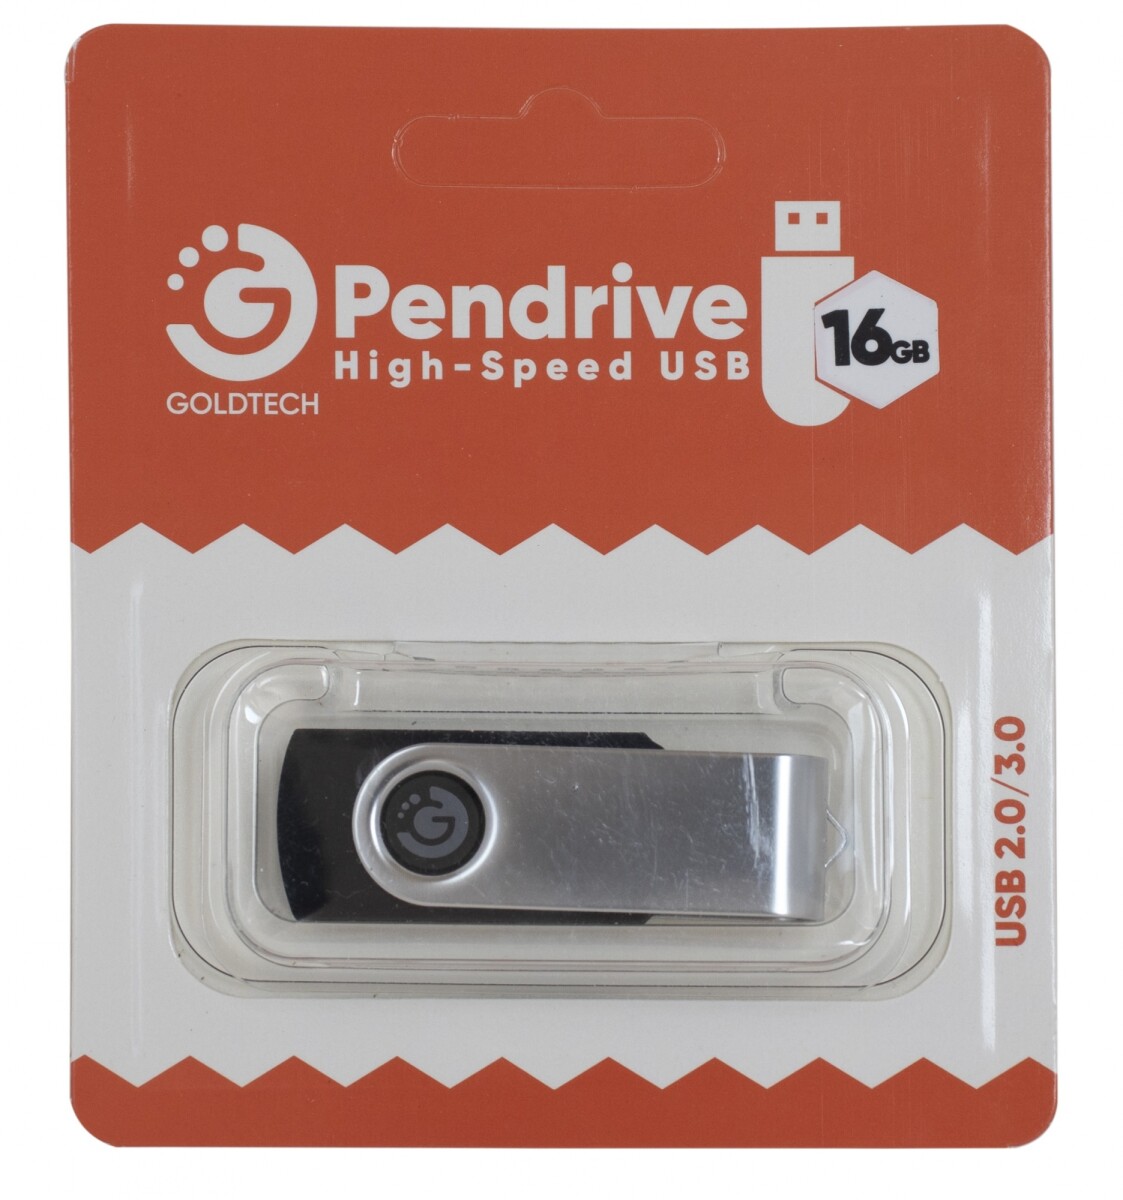 Pendrive Goldtech 16 GB - 001 